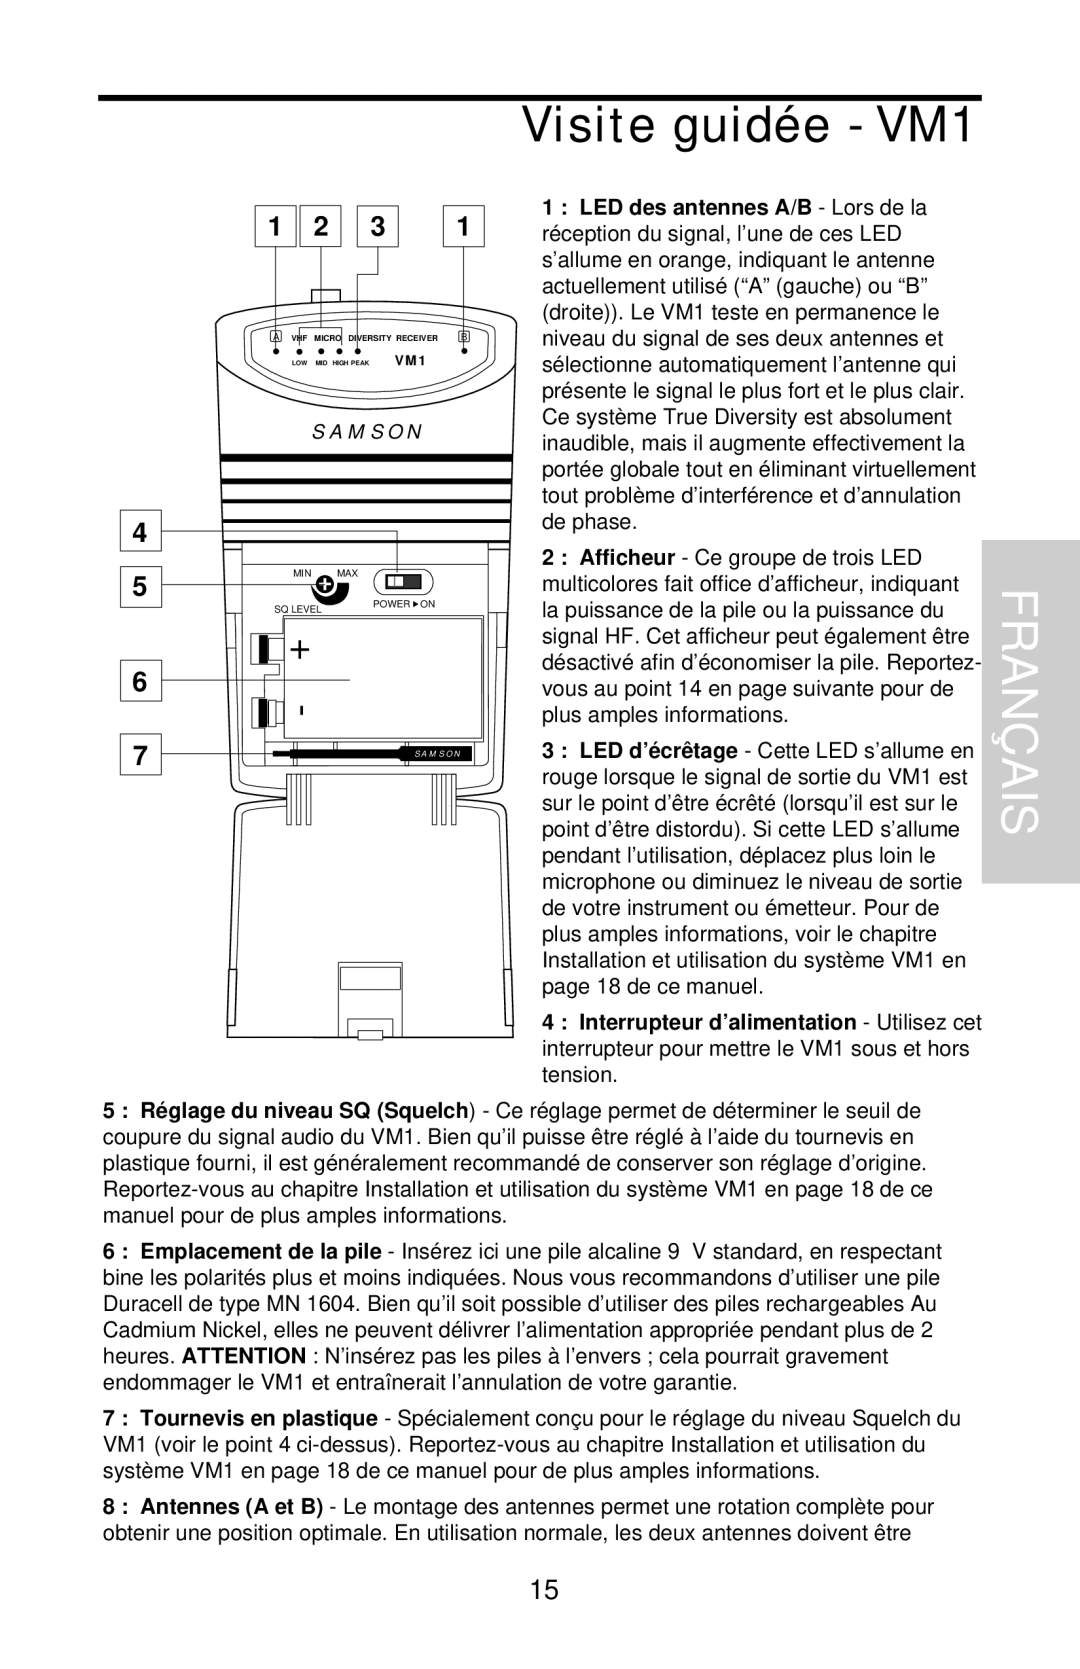 Samson VHF Micro TRUE DIVERSITY WIRELESS owner manual Visite guidée - VM1, Franç Ais 